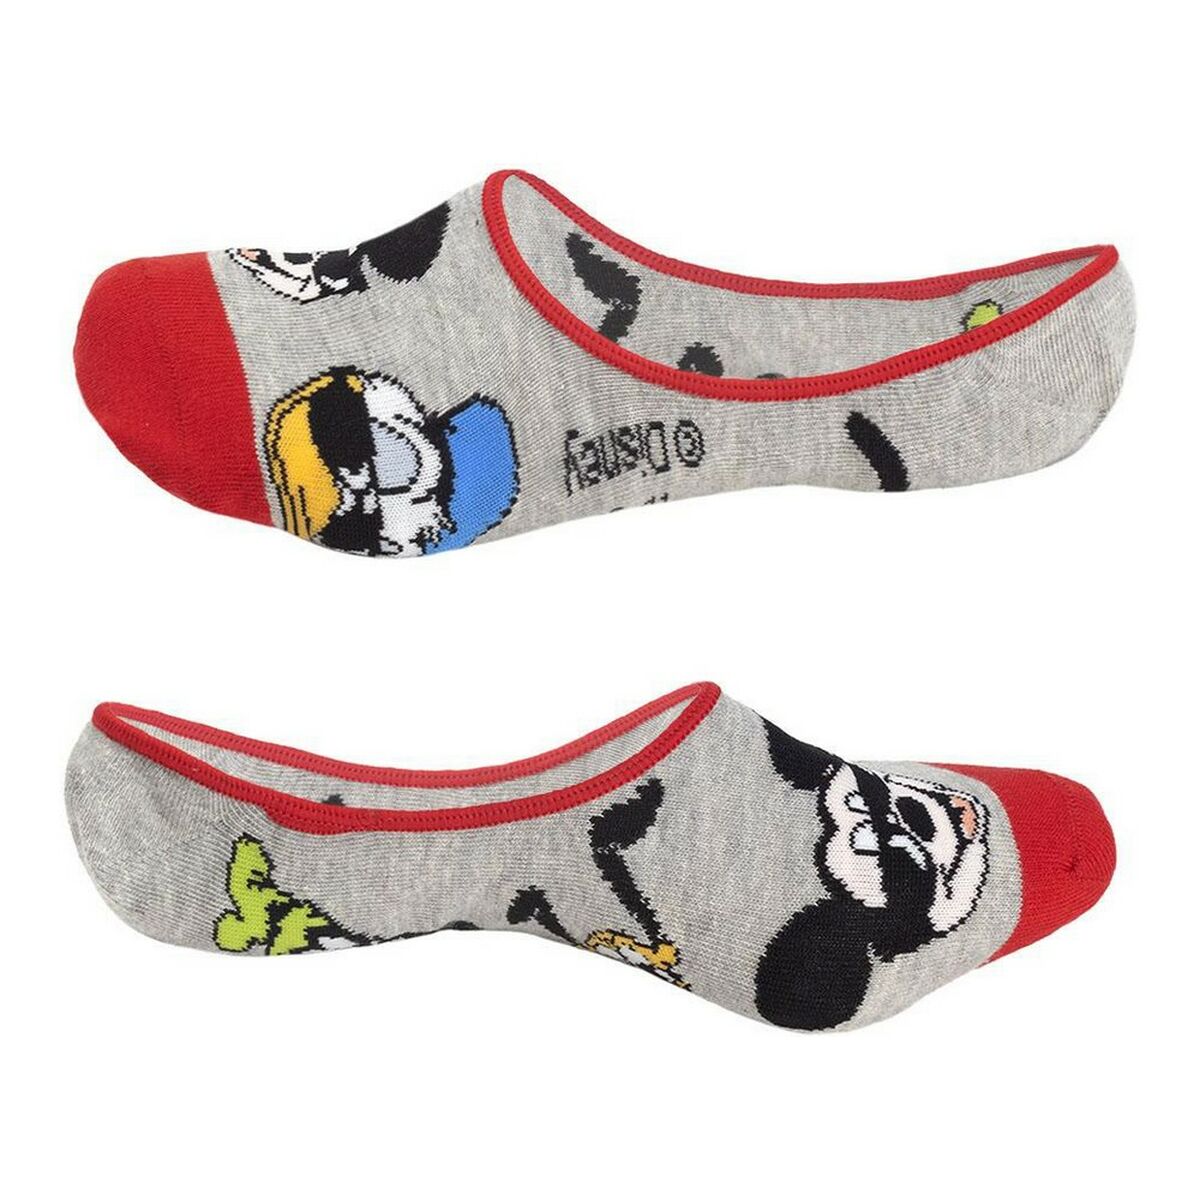 Socks Mickey Mouse Unisex 3 pairs Multicolour